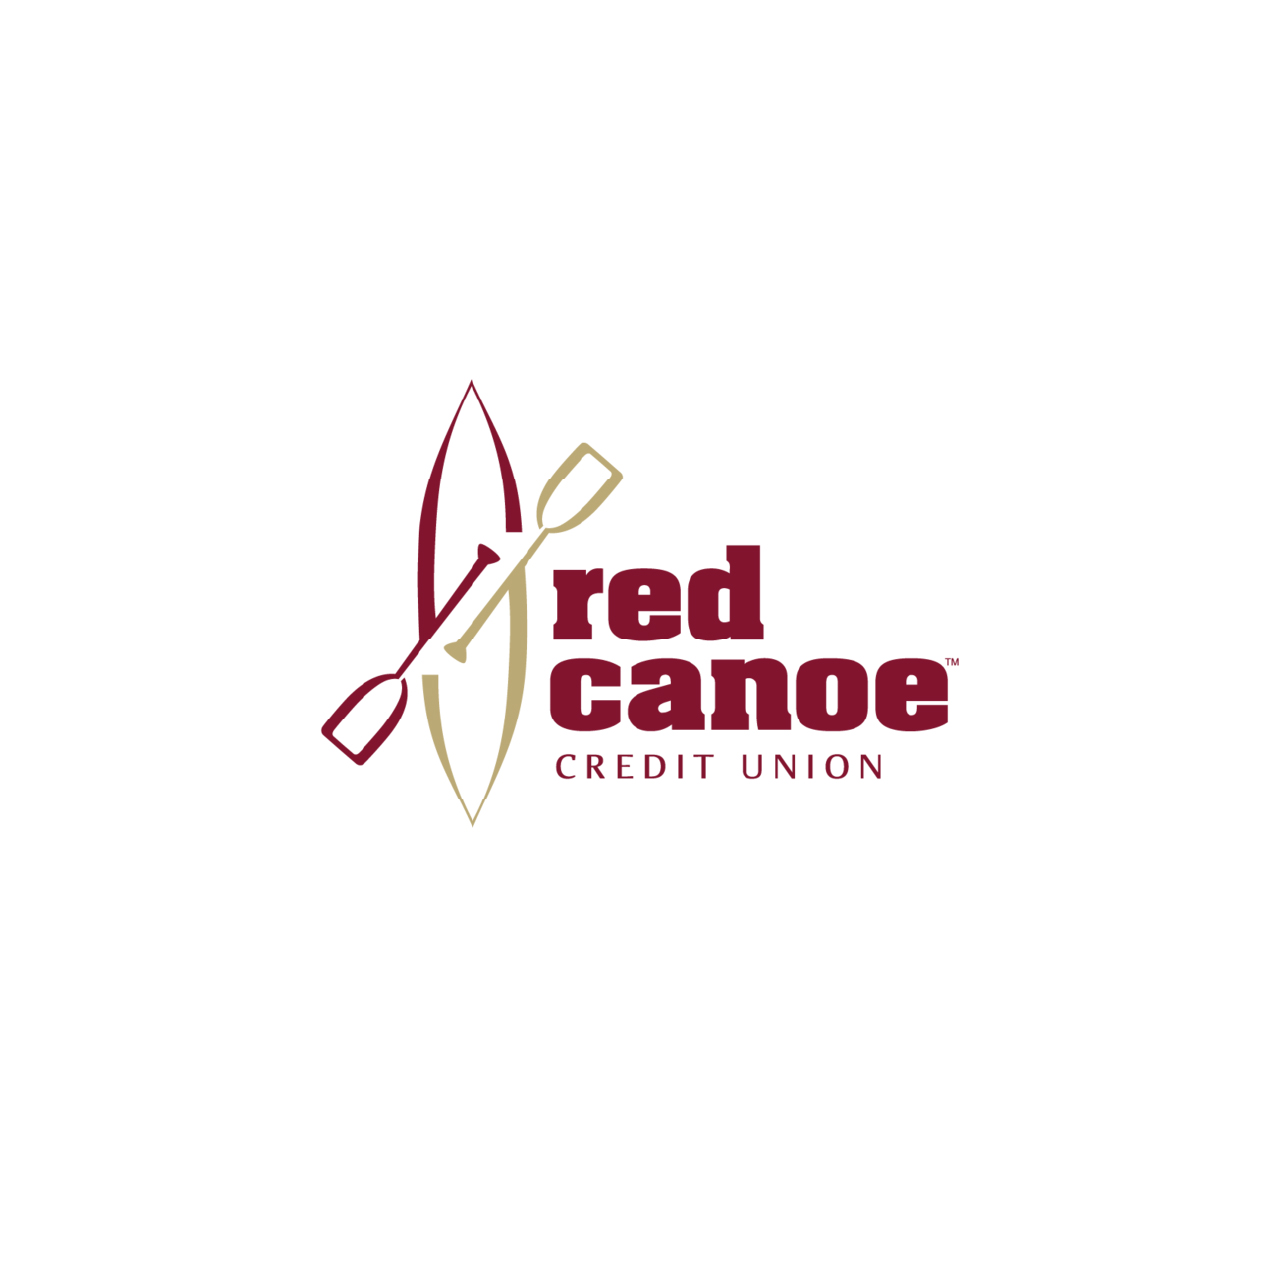 Red Canoe Credit Union logo